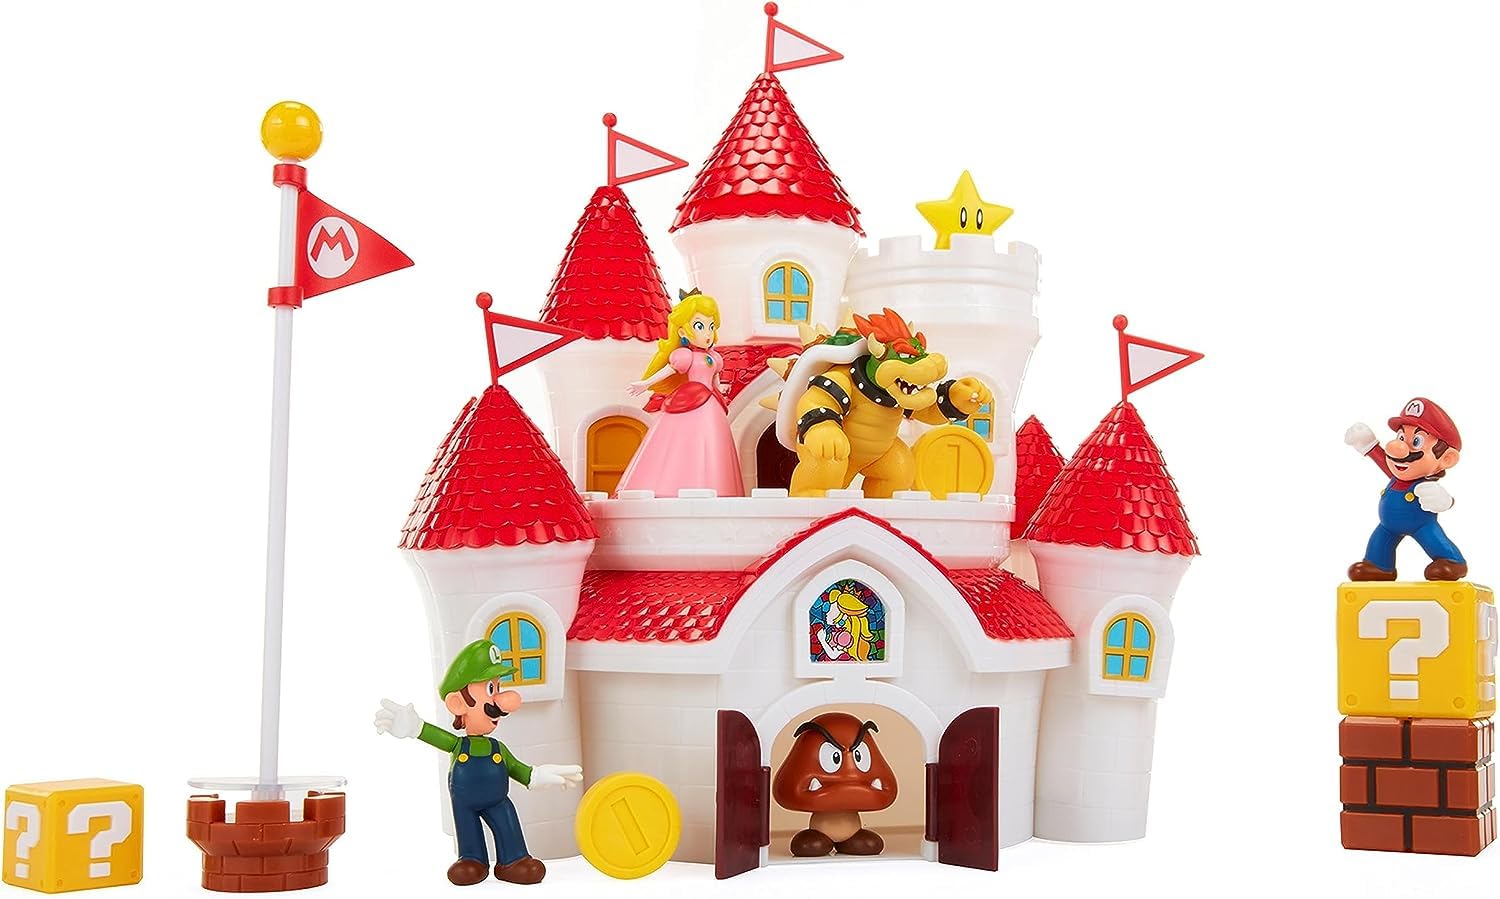 World of Nintendo Super Mario Nintendo Deluxe Mushroom Kingdom castle, Wall Display & Playset with (5) 25 Articulated Action Figures (Exclusive Bo